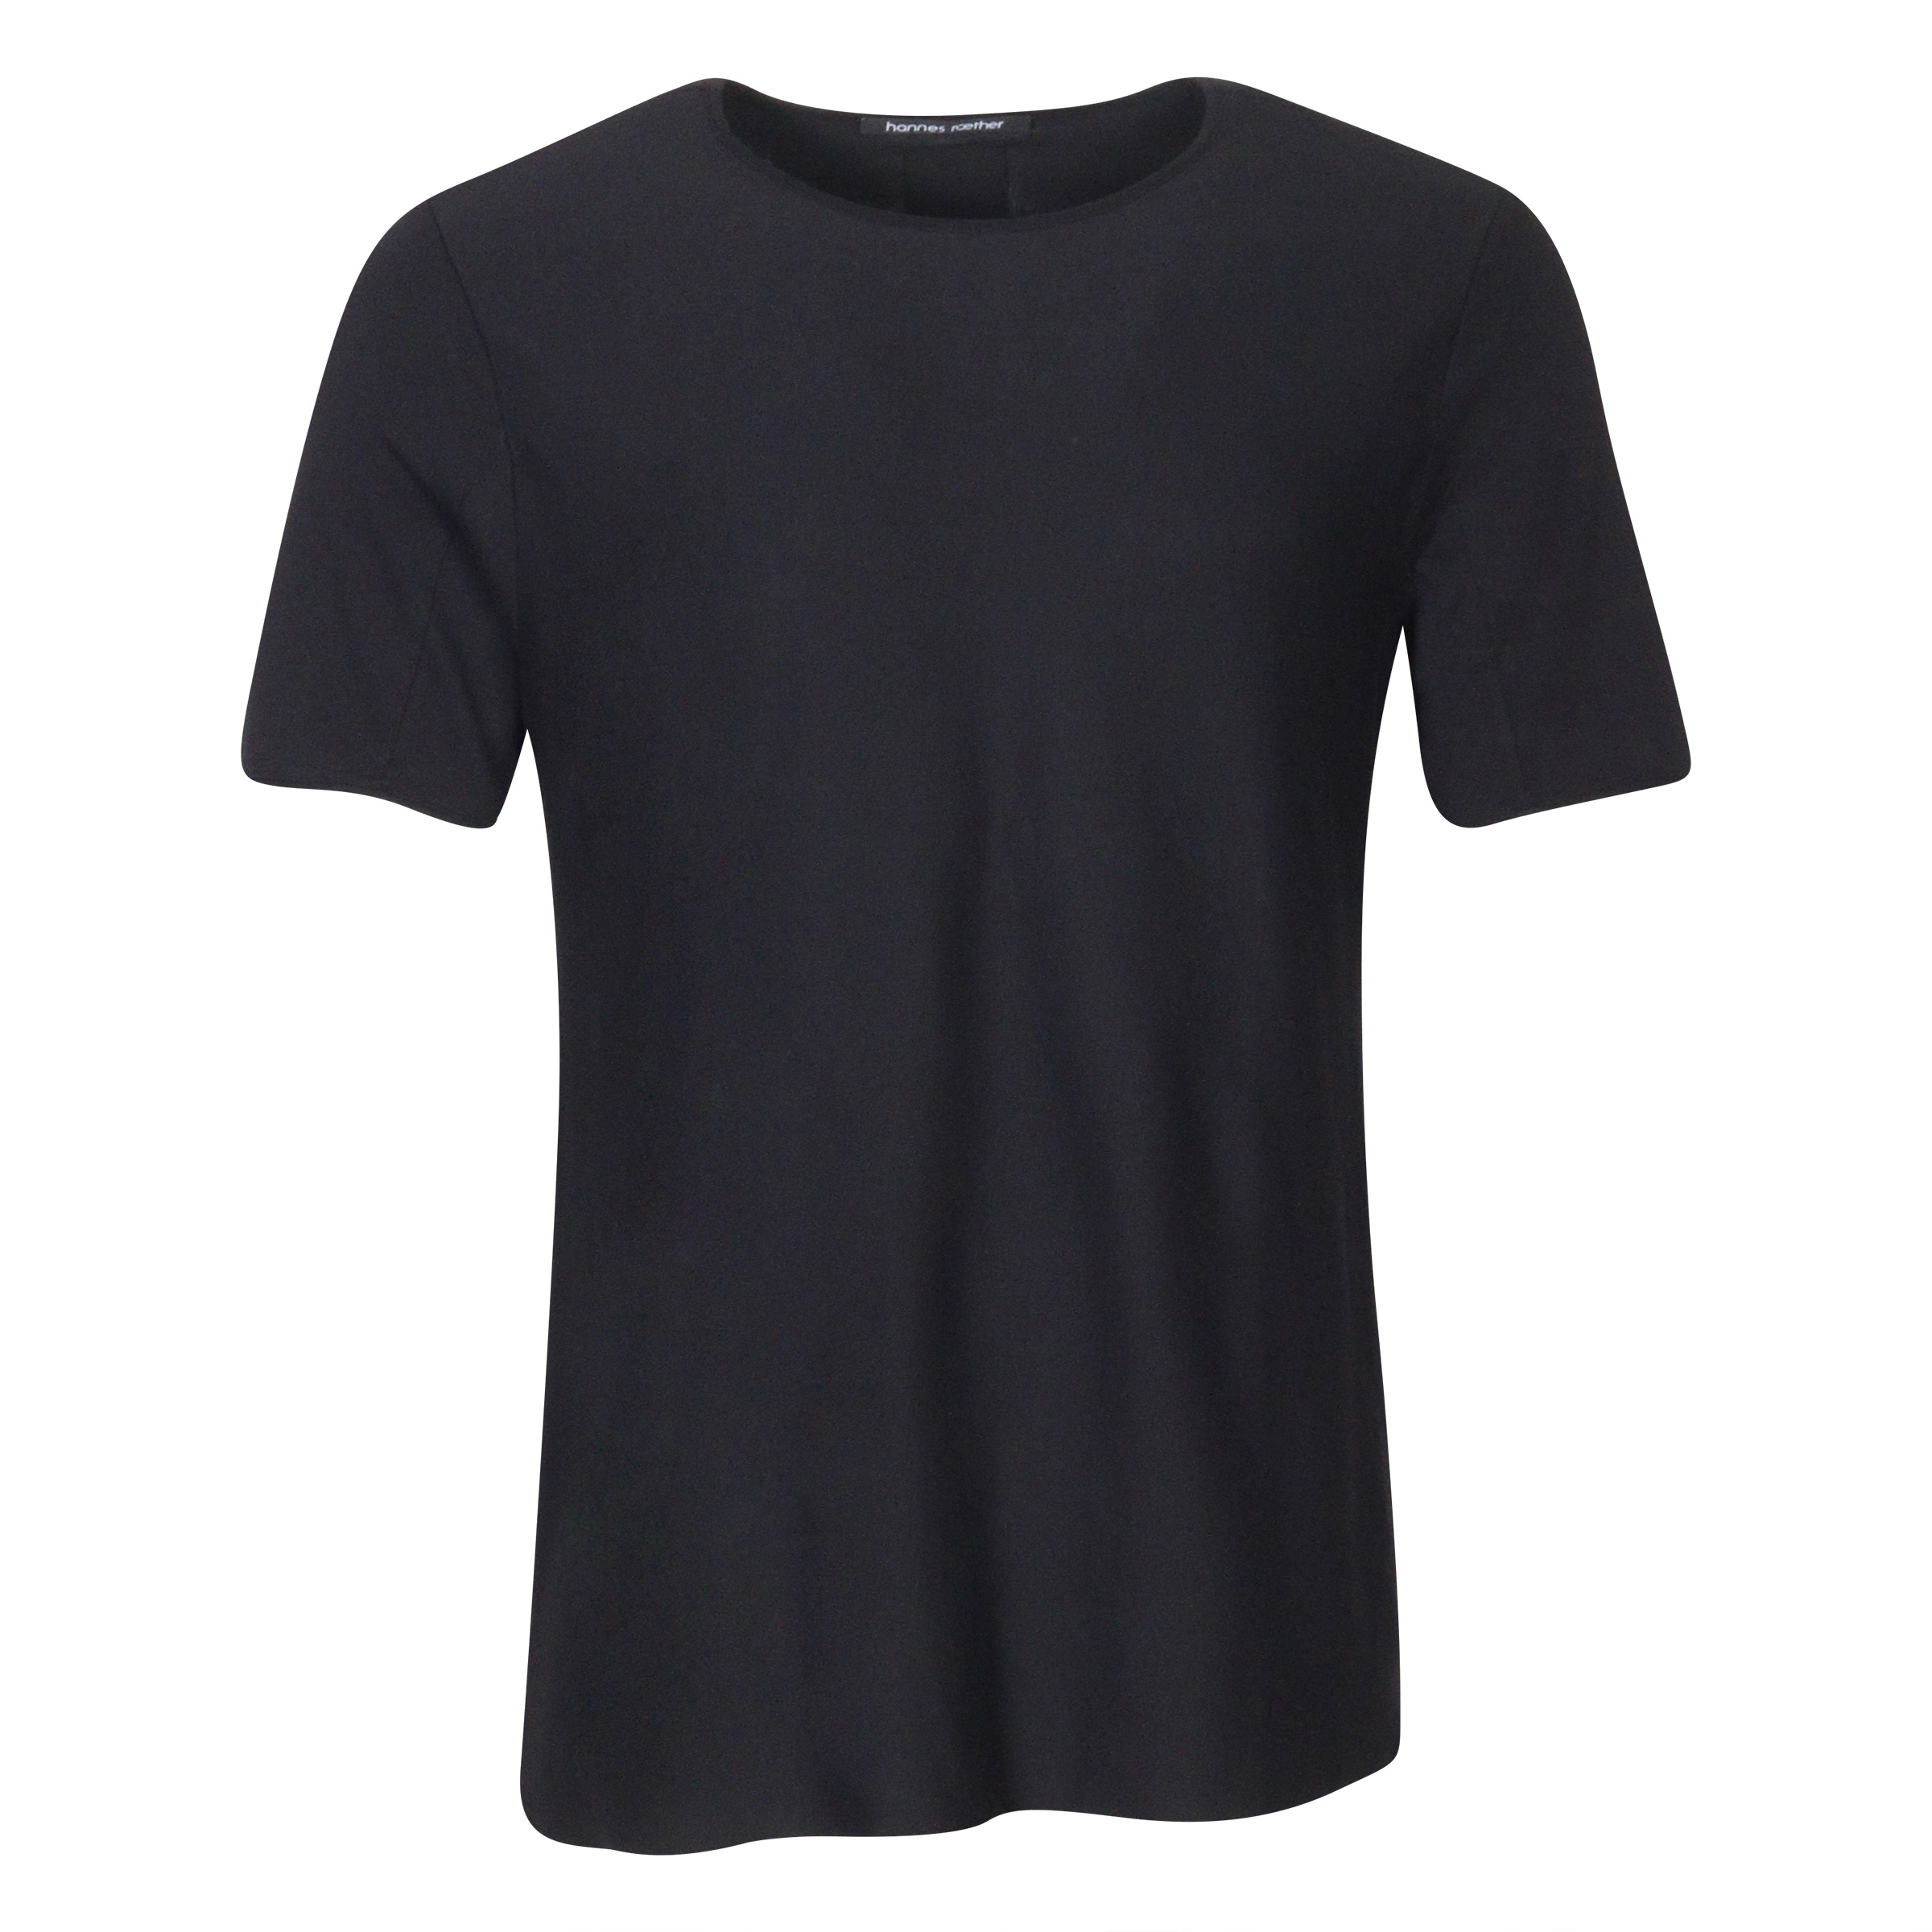 Hannes Roether T-Shirt Black